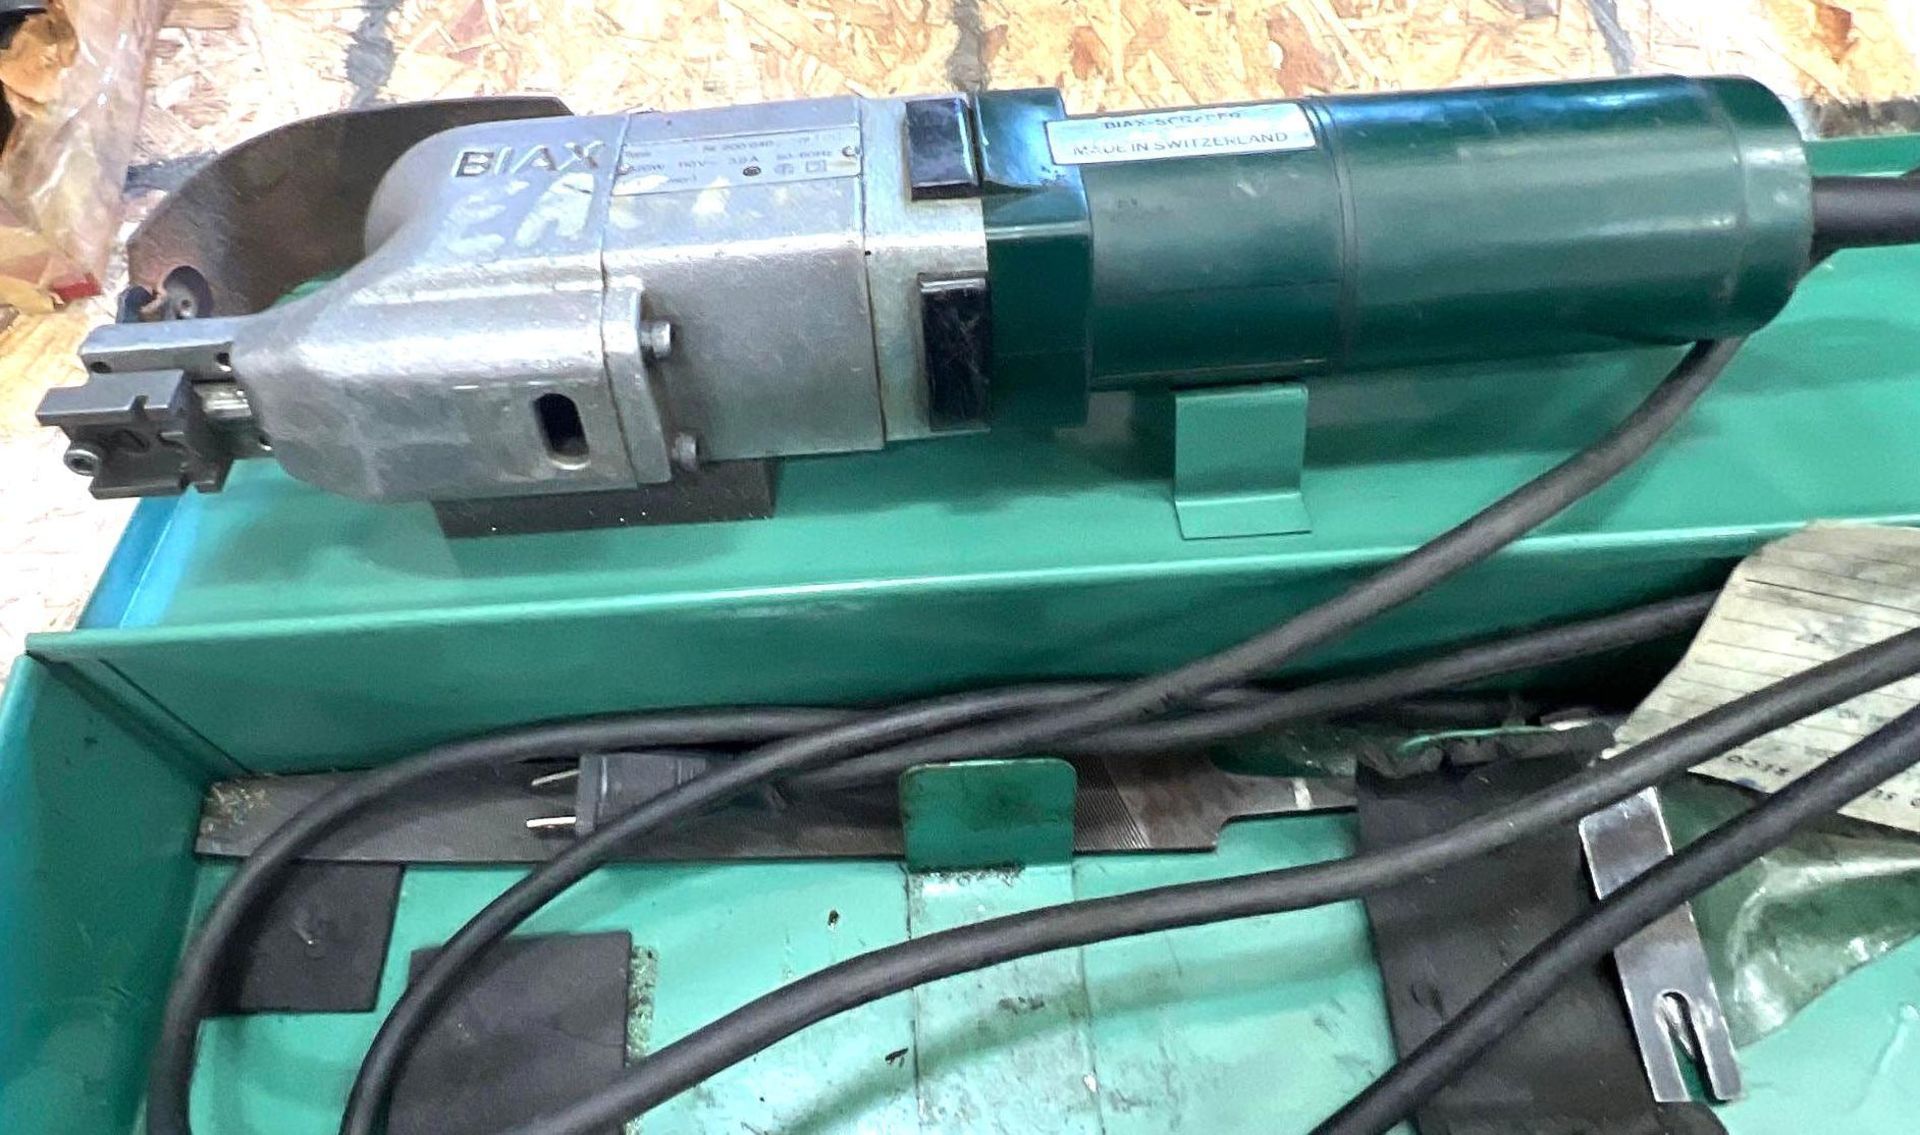 Biax HM-10 Power Scraper, 110V w/ Case - Image 3 of 6